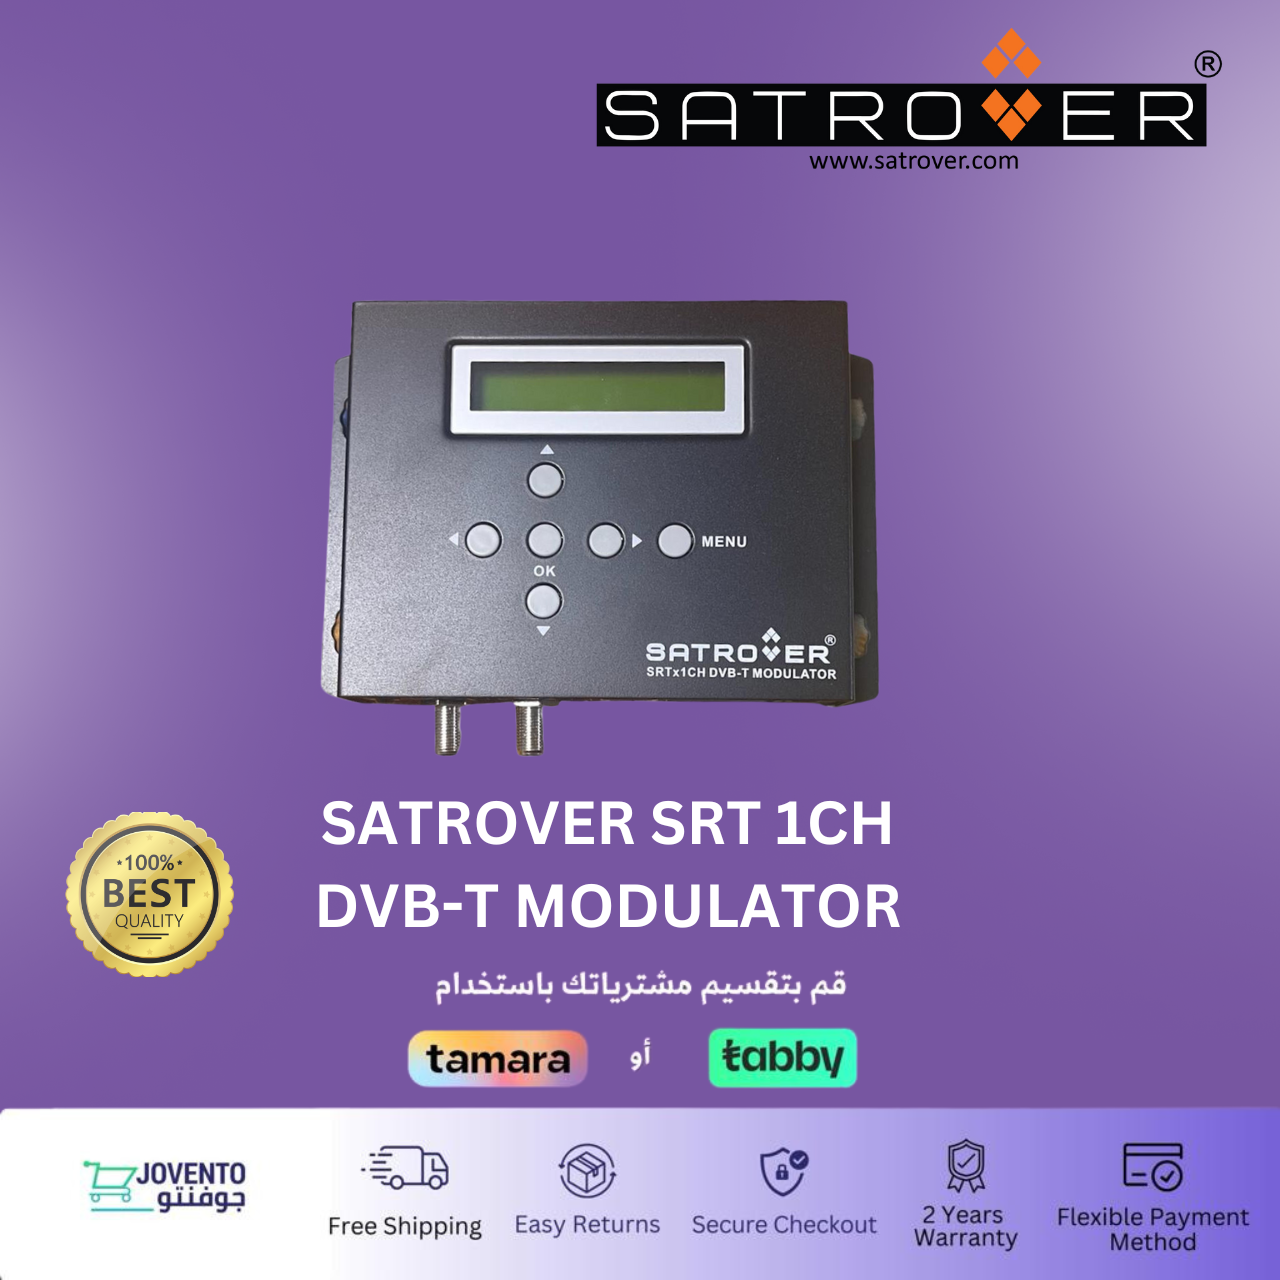 SATROVER SRT 1CH DVB-T MODULATOR